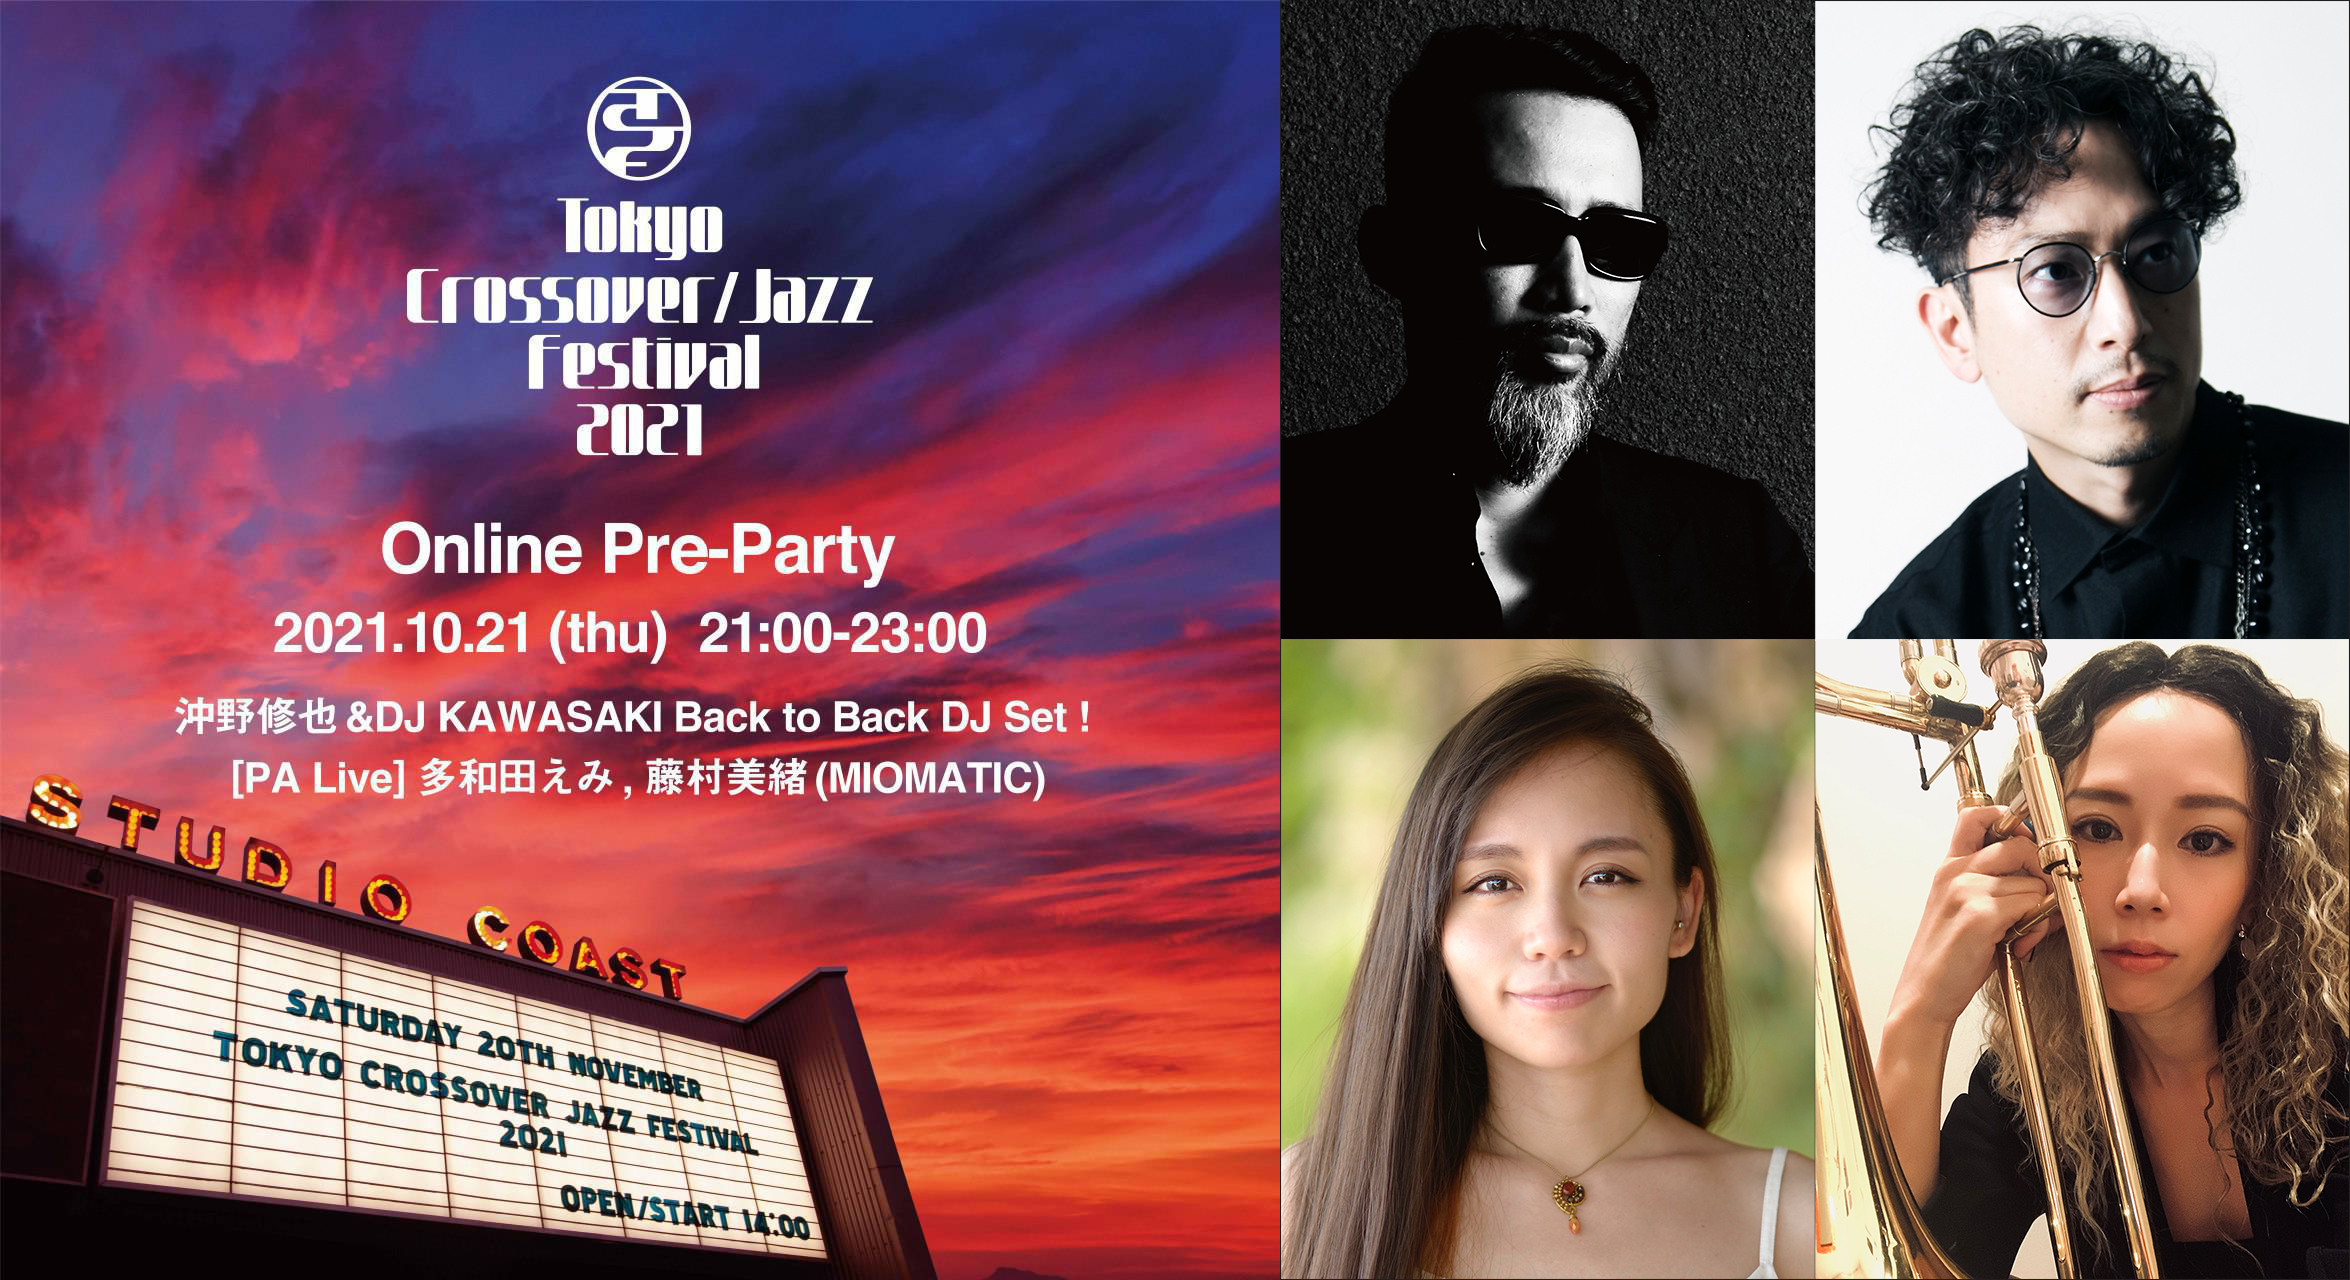 Tokyo Crossover/Jazz Festival 2021 Online Pre-Party